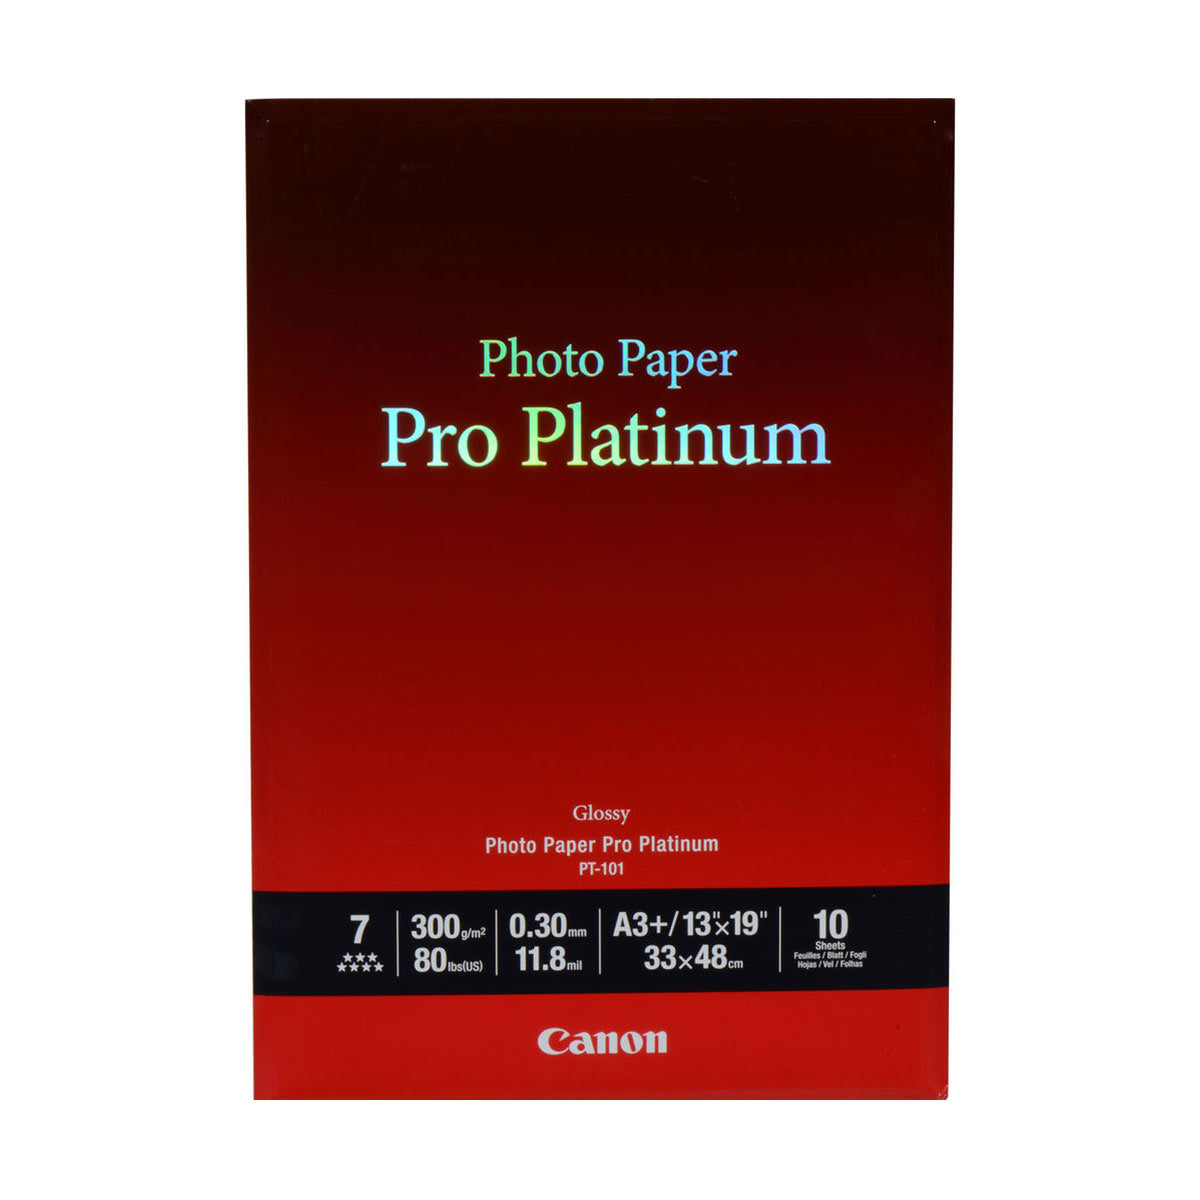 Canon Photo Paper Pro Platinum 13x19" (10)